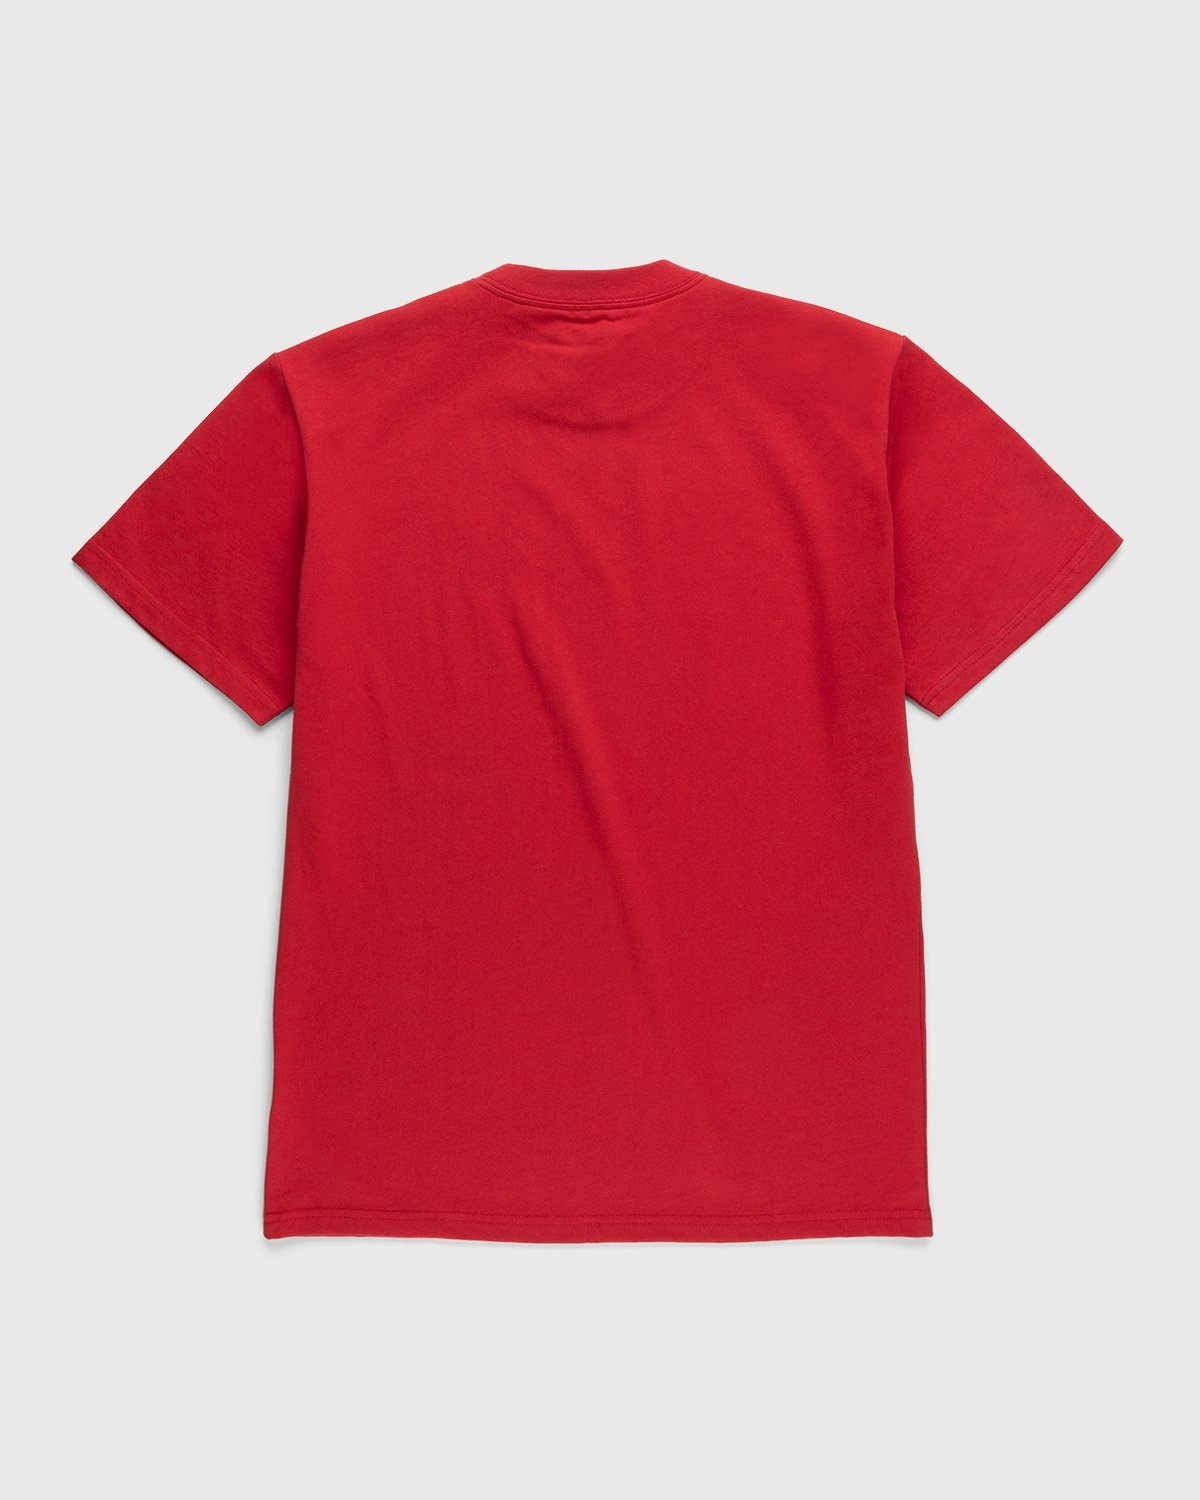 Carhartt WIP – University Script T-Shirt Cornel White - T-Shirts - Red - Image 2